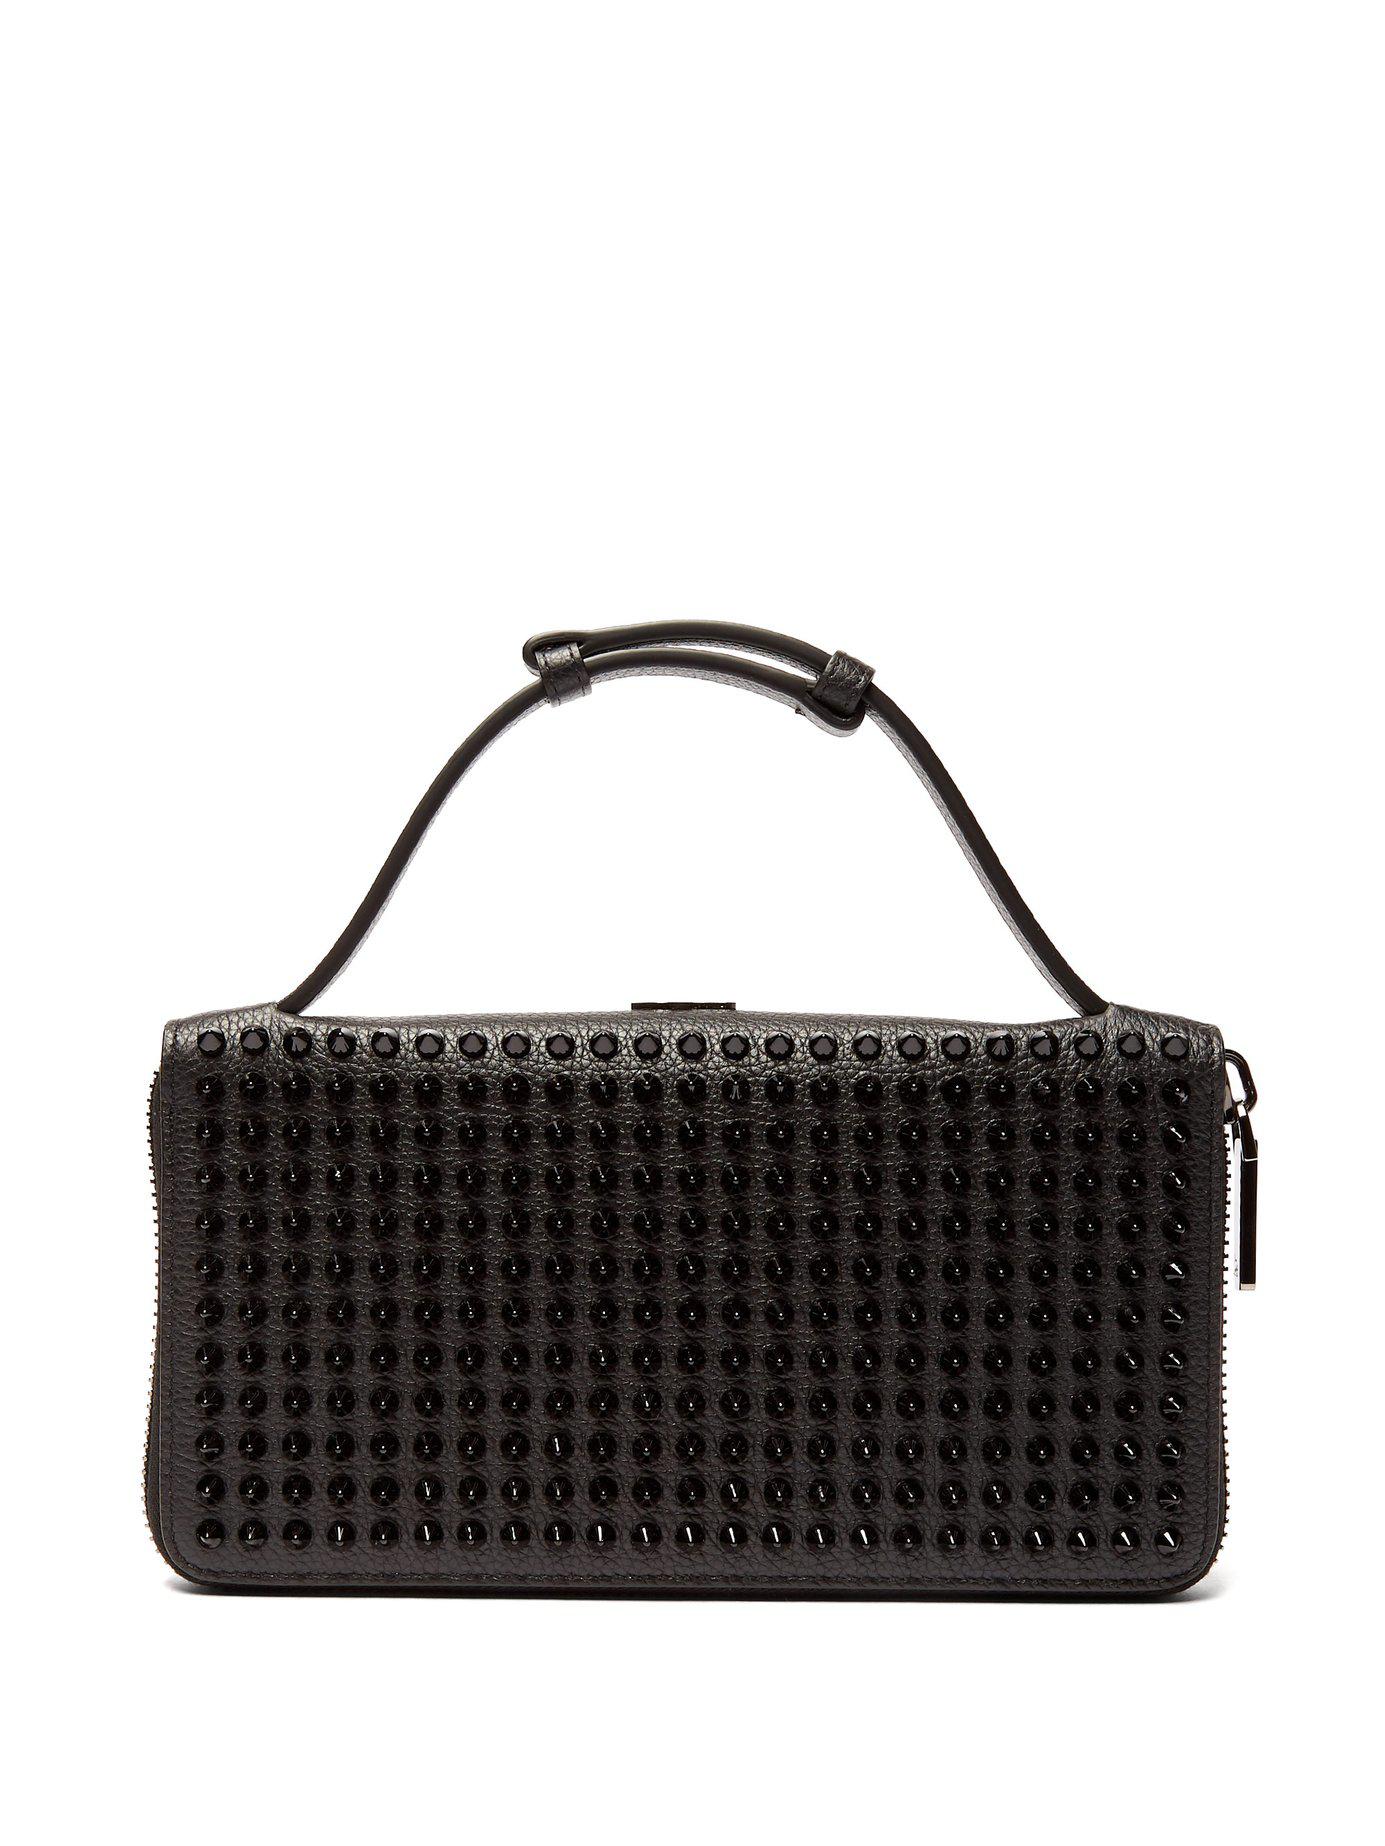 Christian Louboutin purse 1185059 Panettone studs leather Black